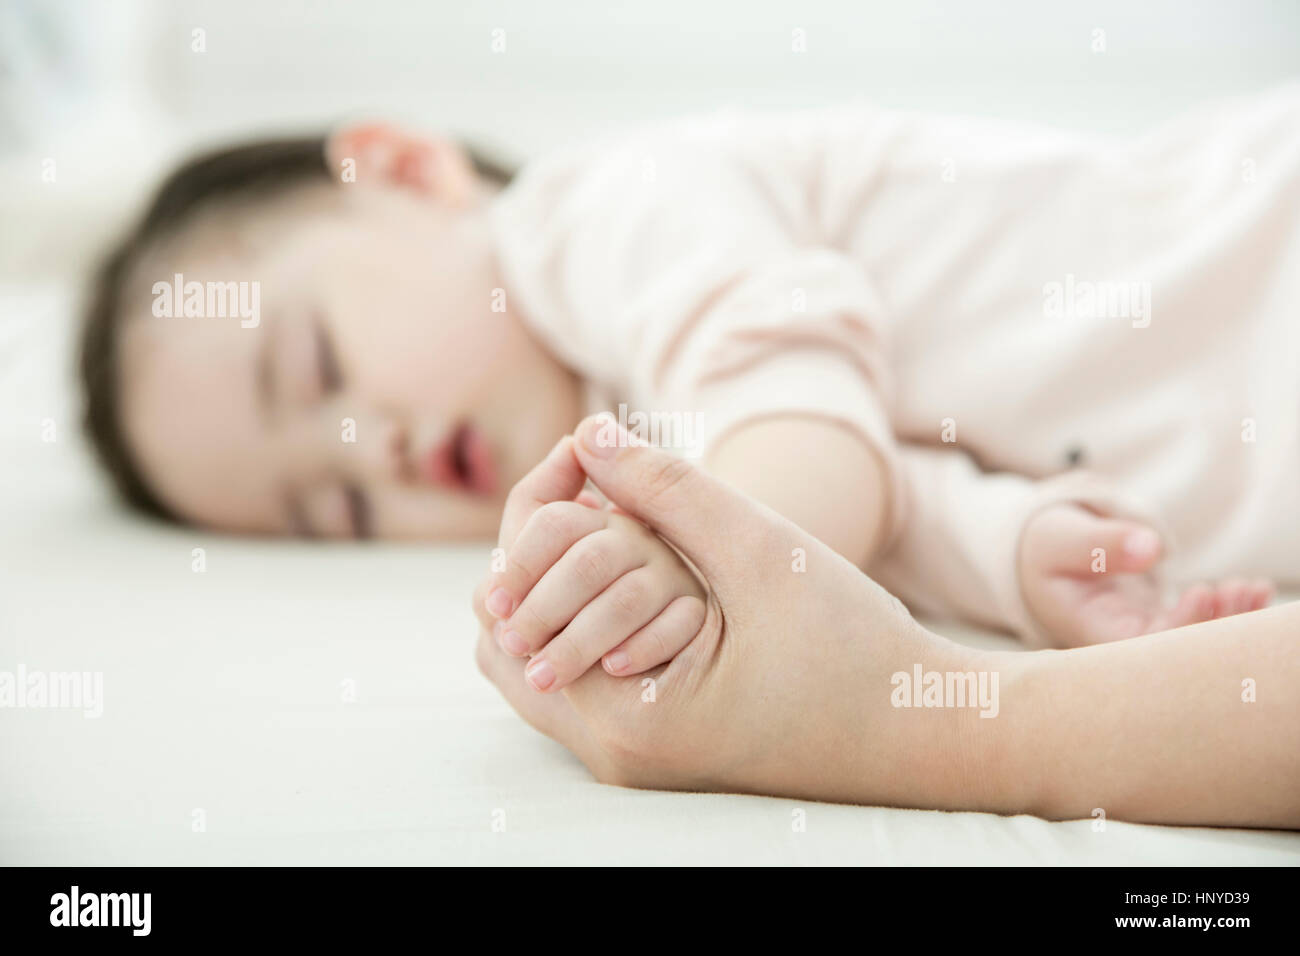 Hand holding sleeping baby's hand Stock Photo